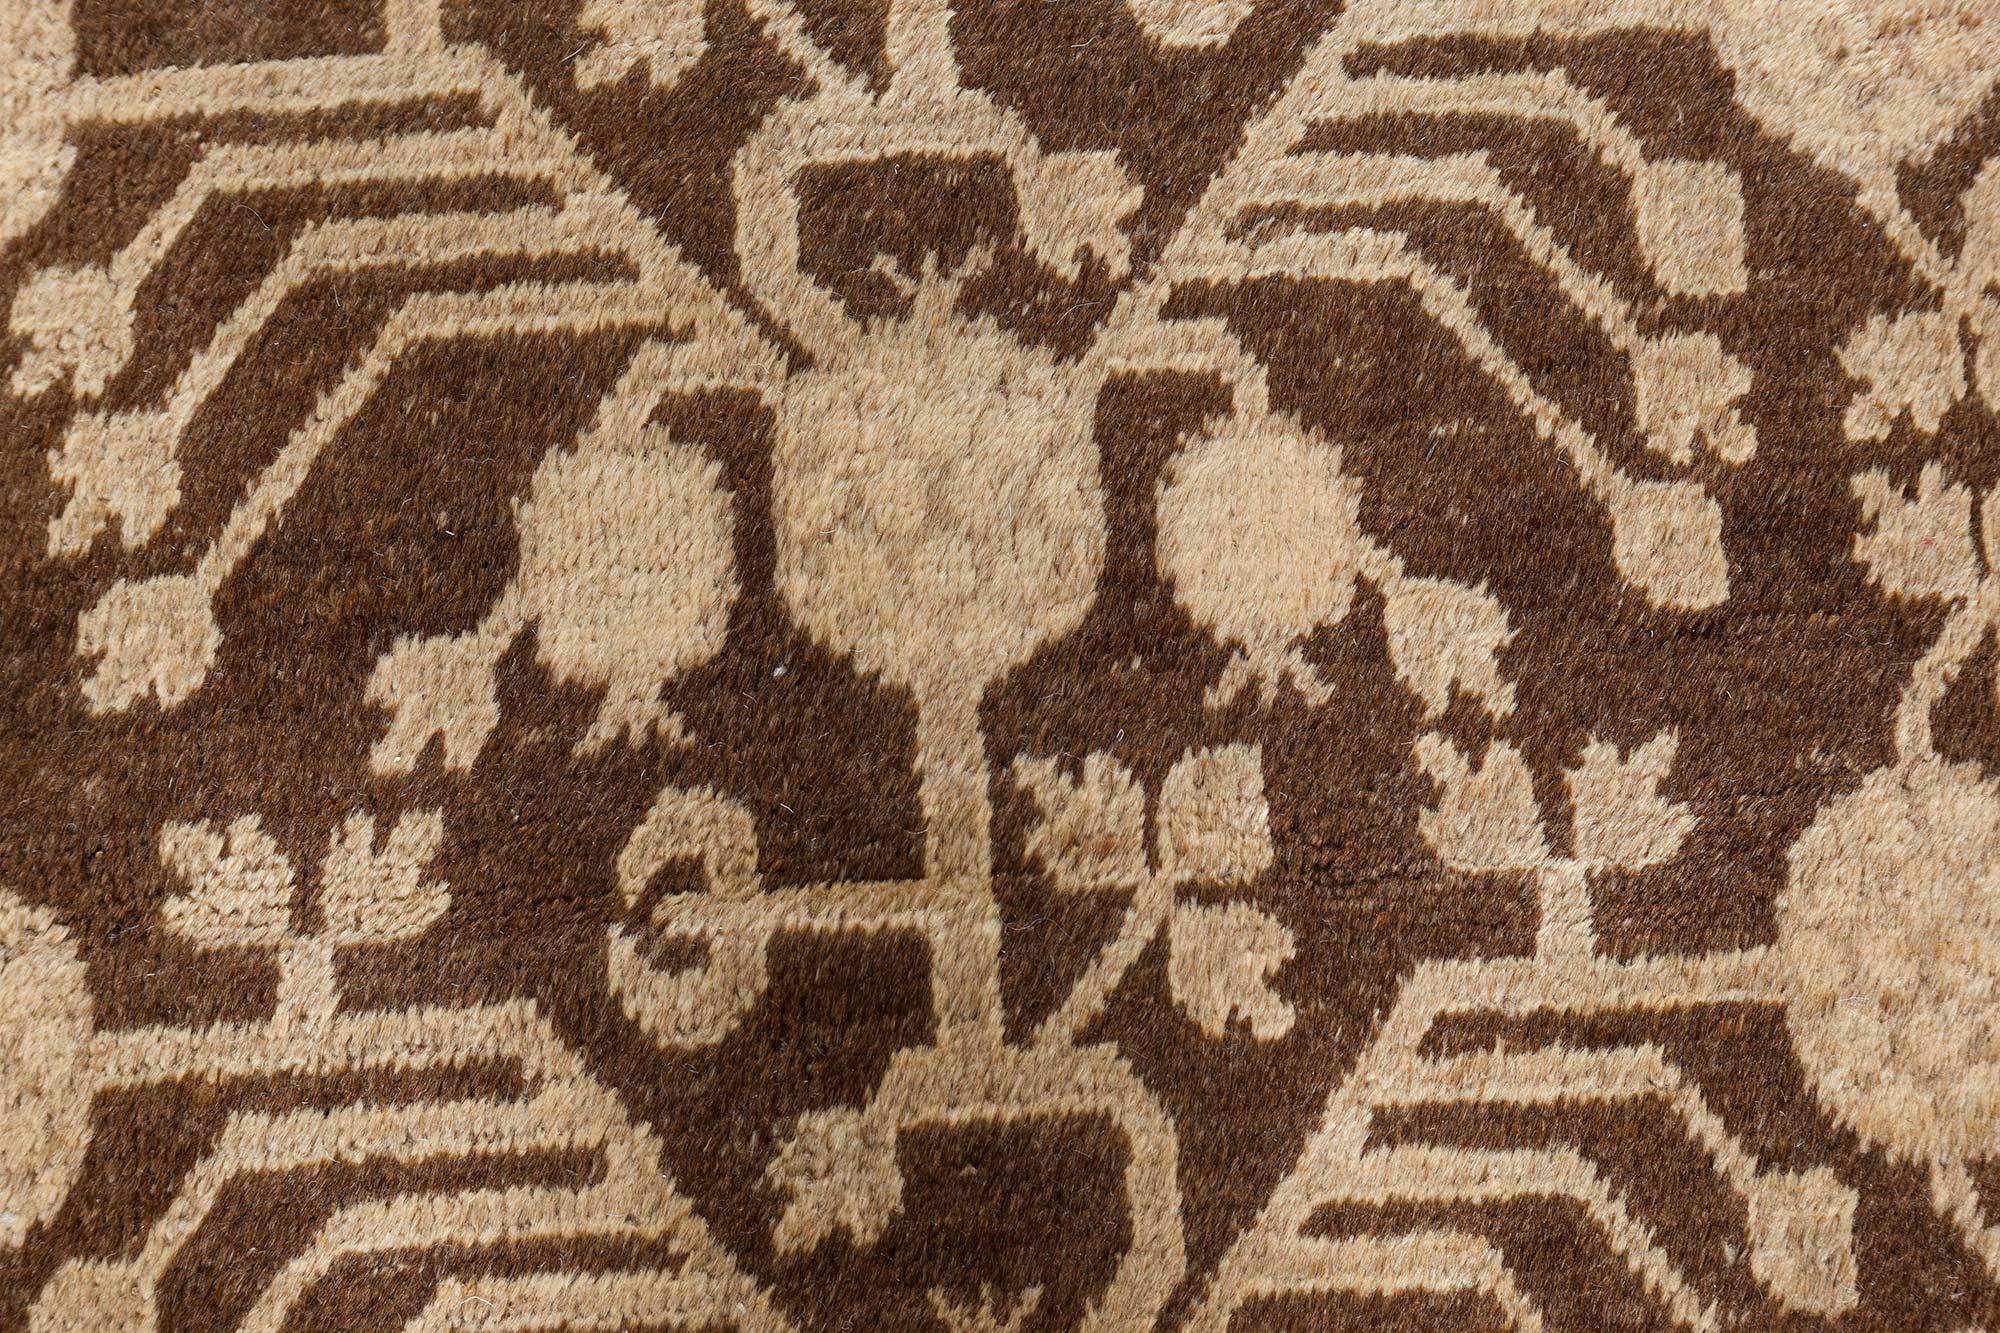 Vintage Samarkand ‘Khotan’ botanic handmade wool rug
Size: 6'3